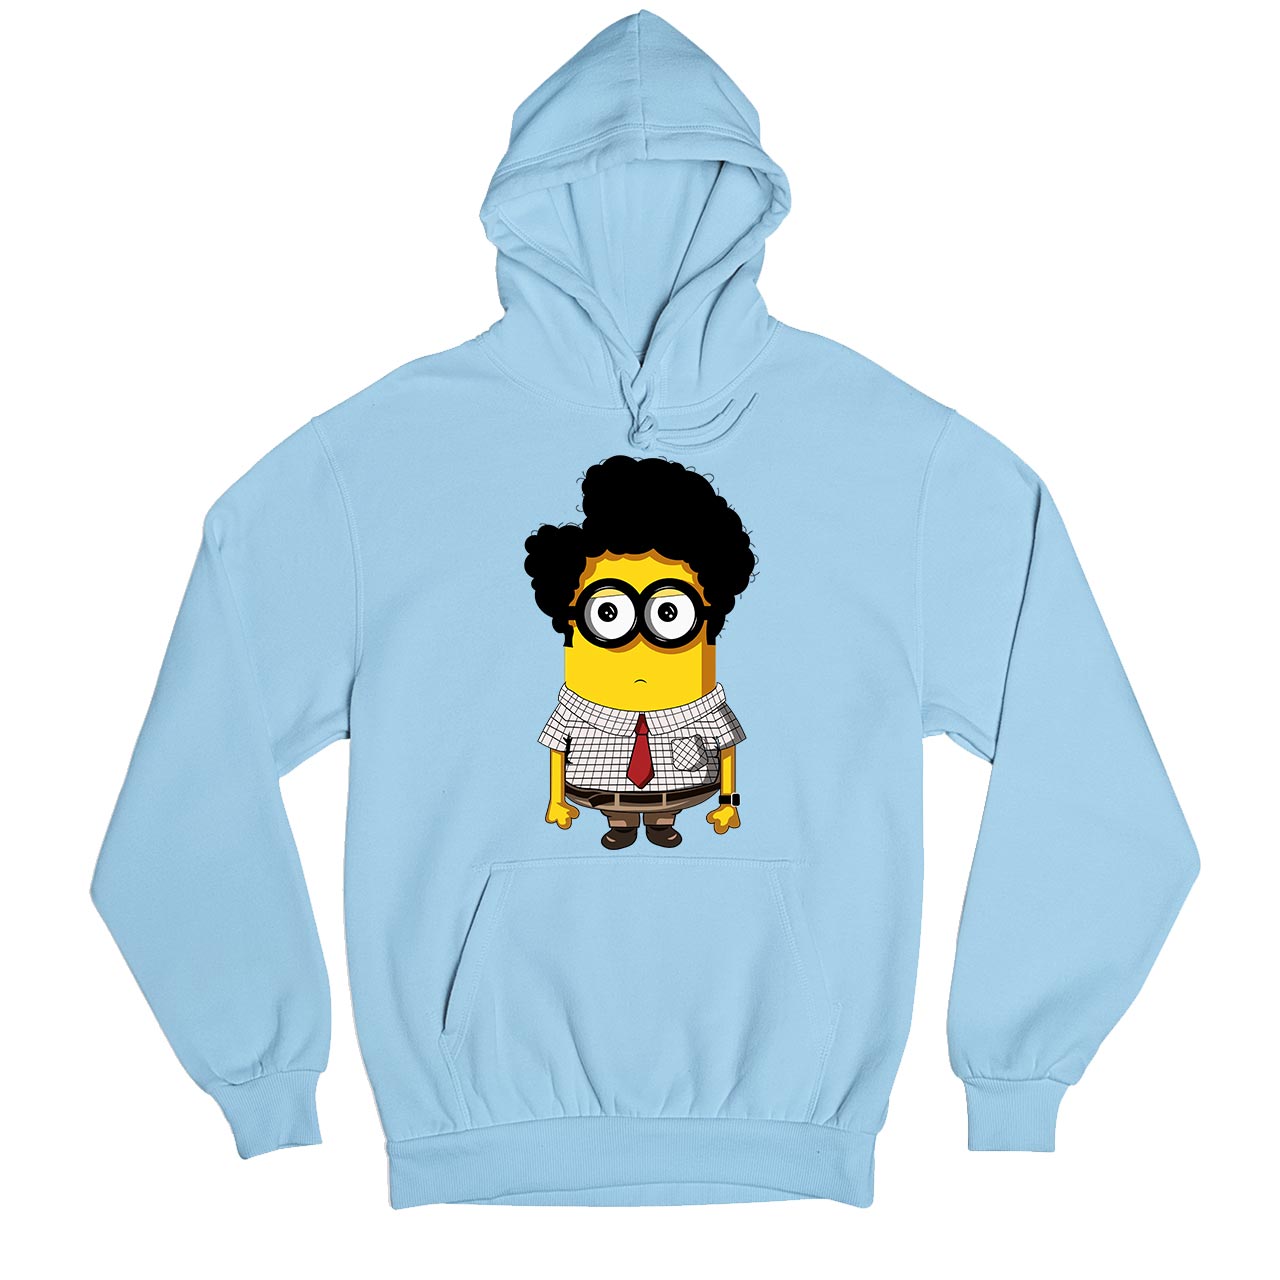 minions hoodie - nerdy min nerdy man hoodie hooded sweatshirt the banyan tee tbt for women boys black grey h&m men girls